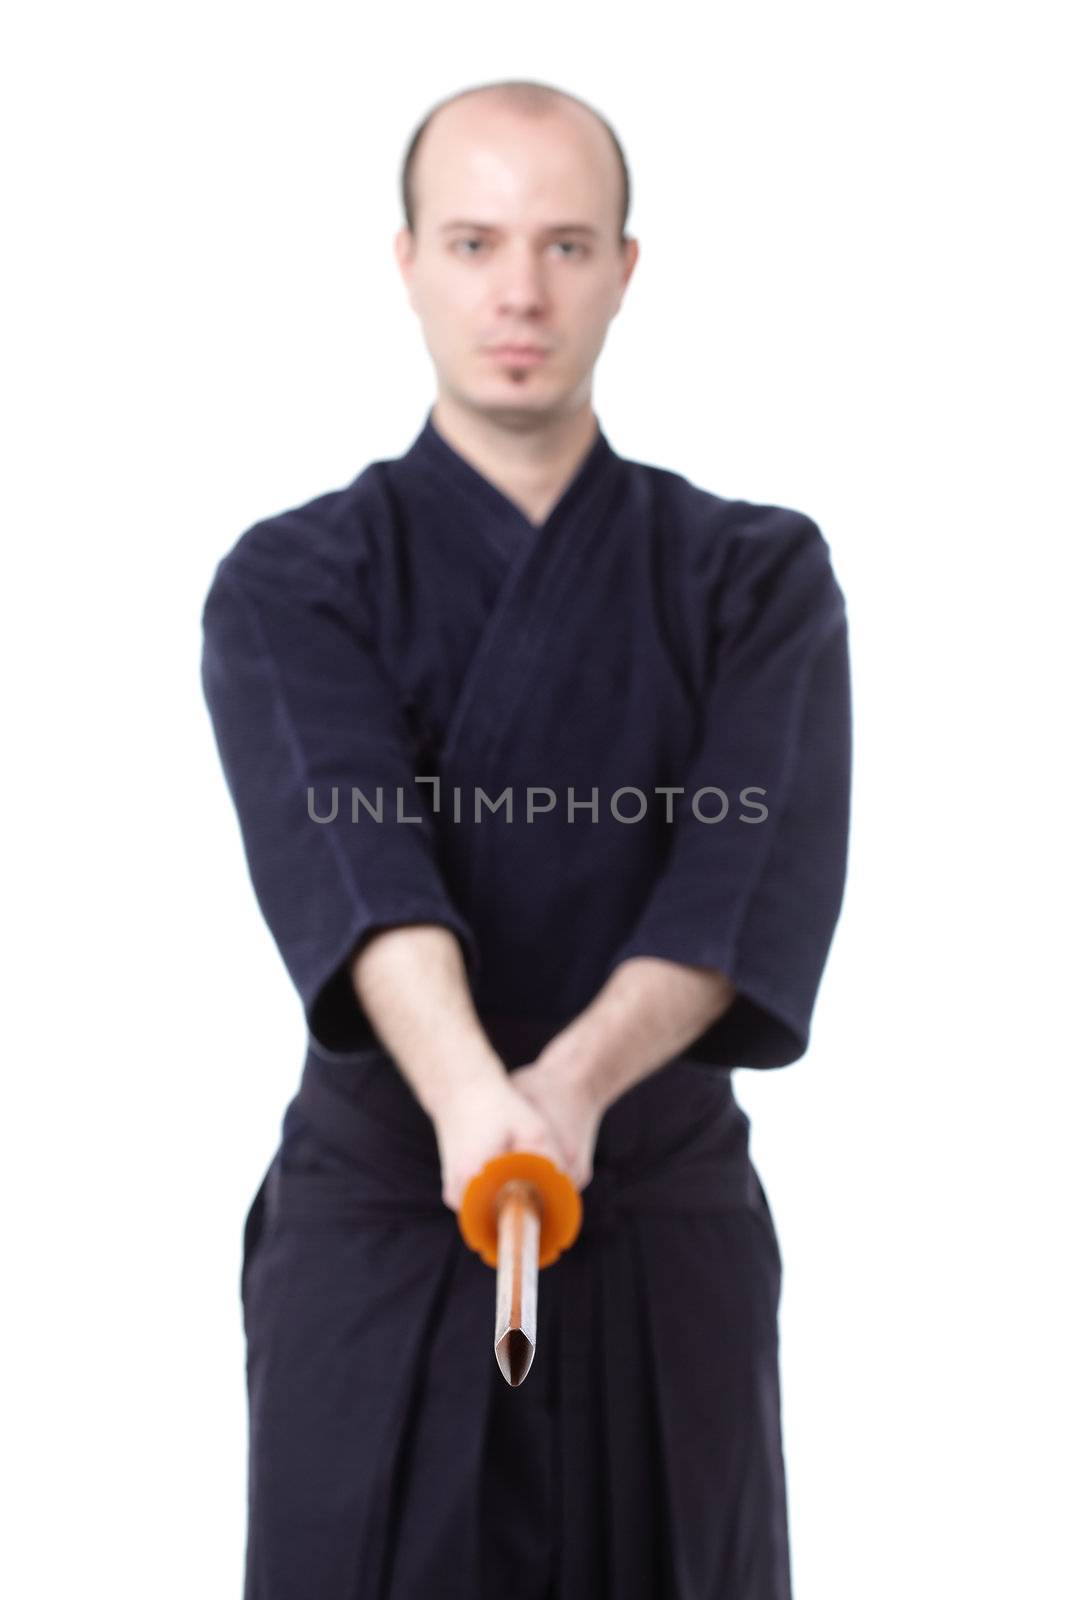 Kendo fighter by kokimk